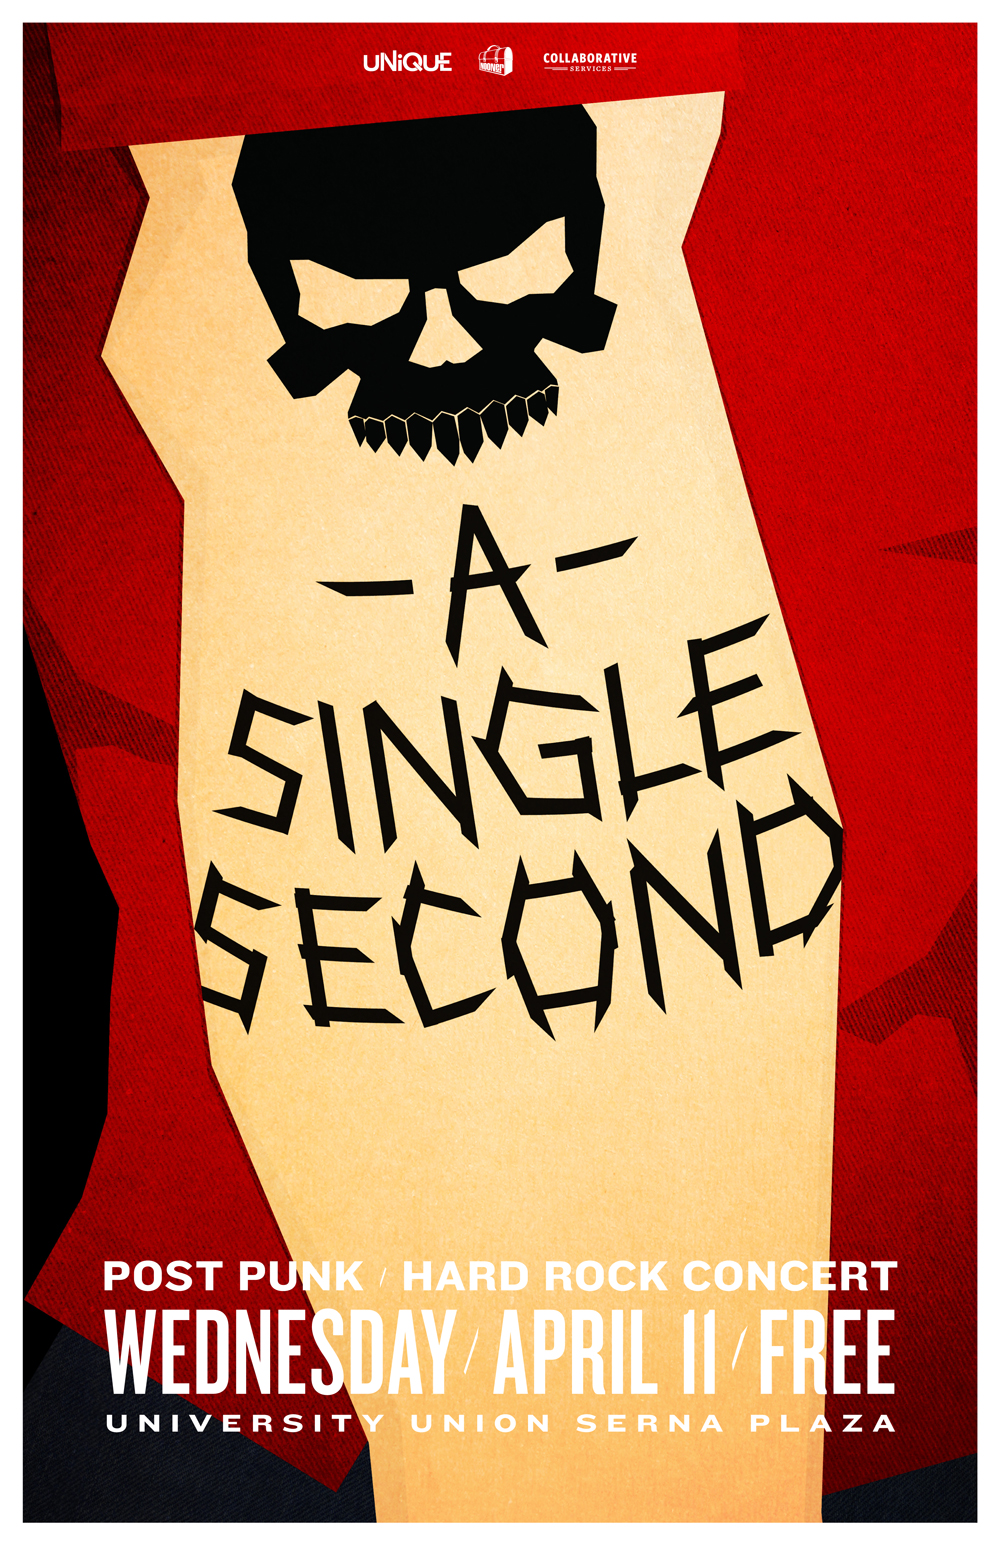 A Single Second